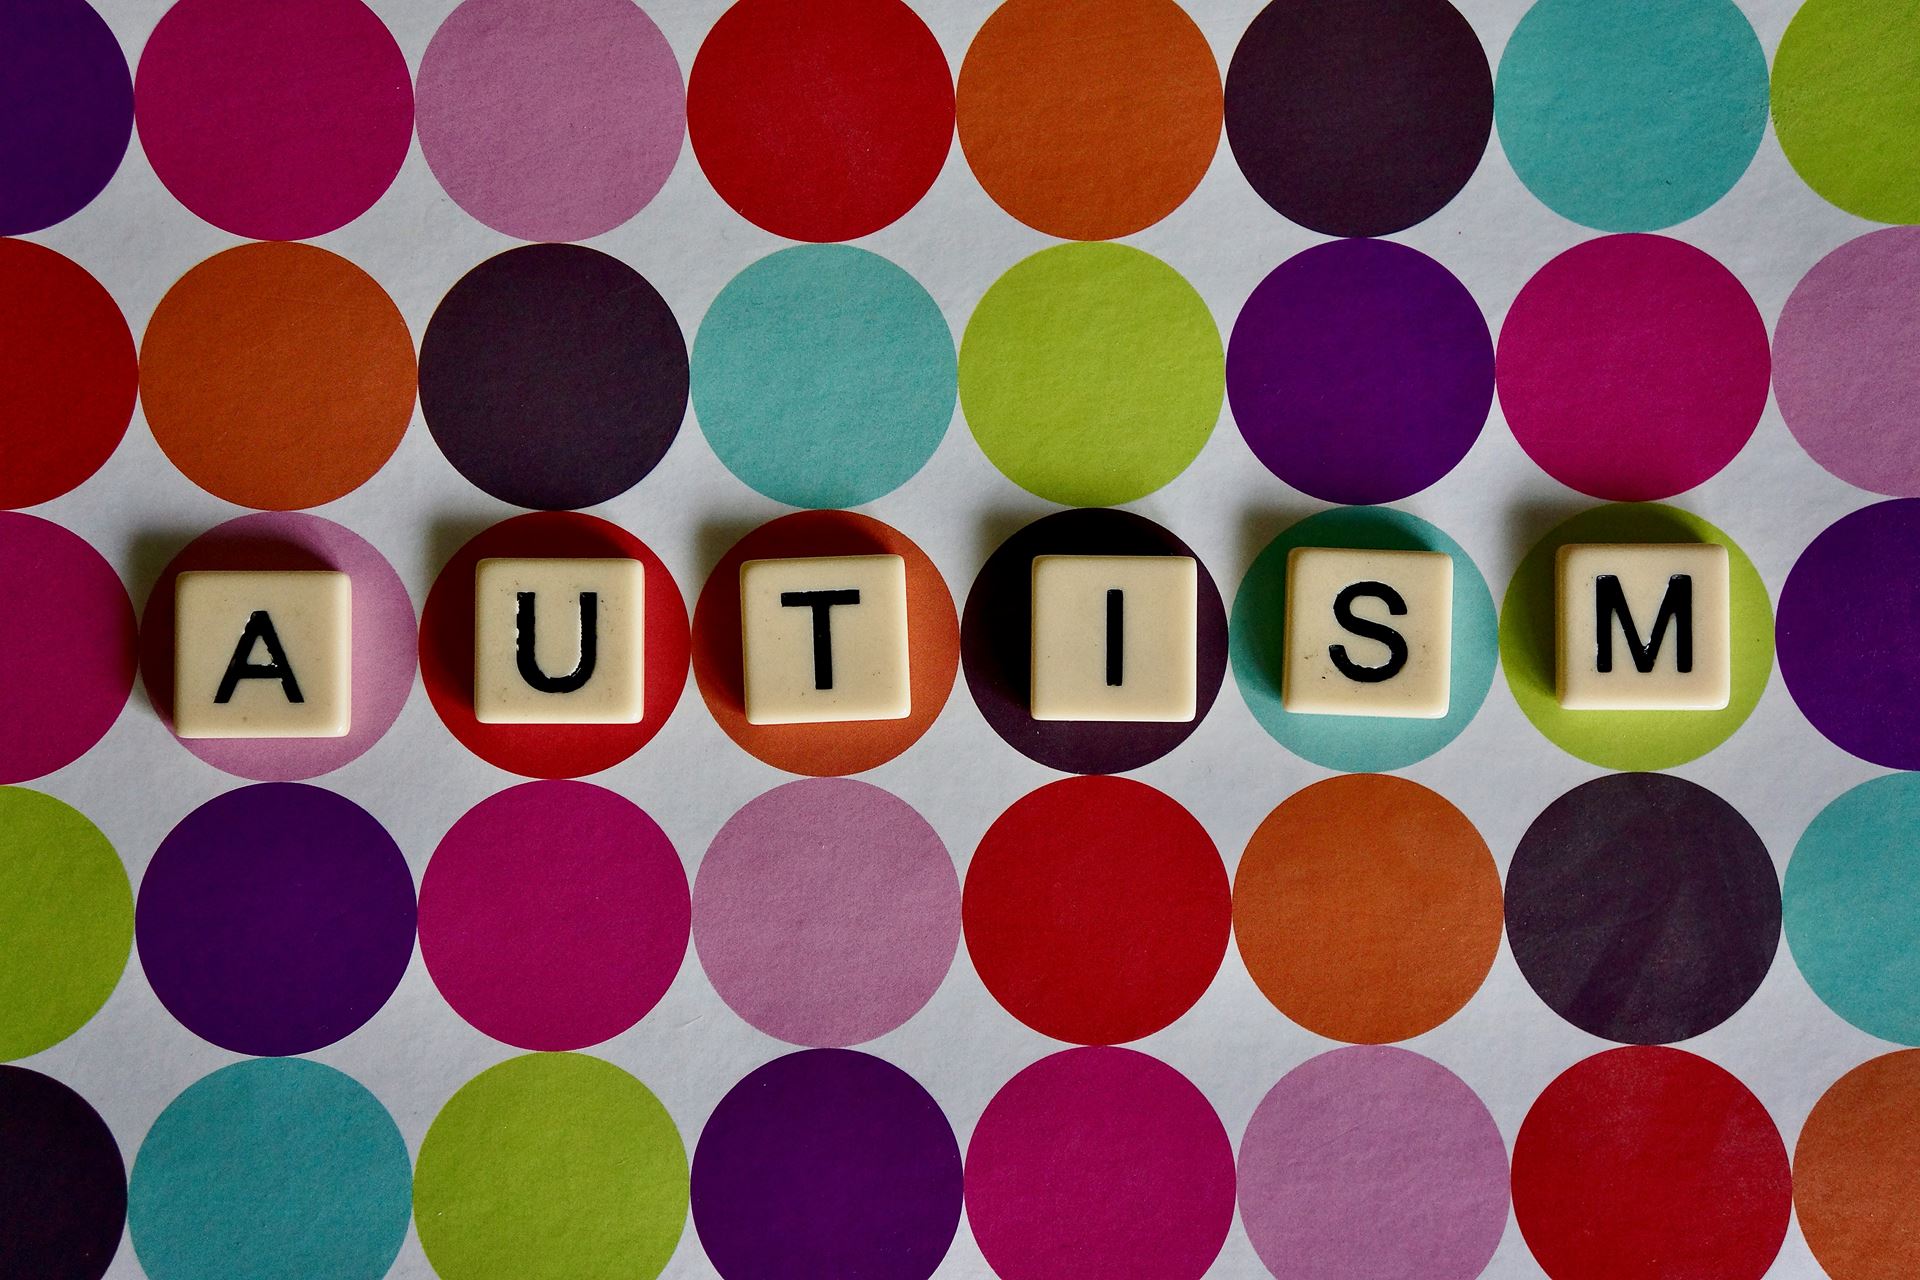 scrabble tiles spelling autism